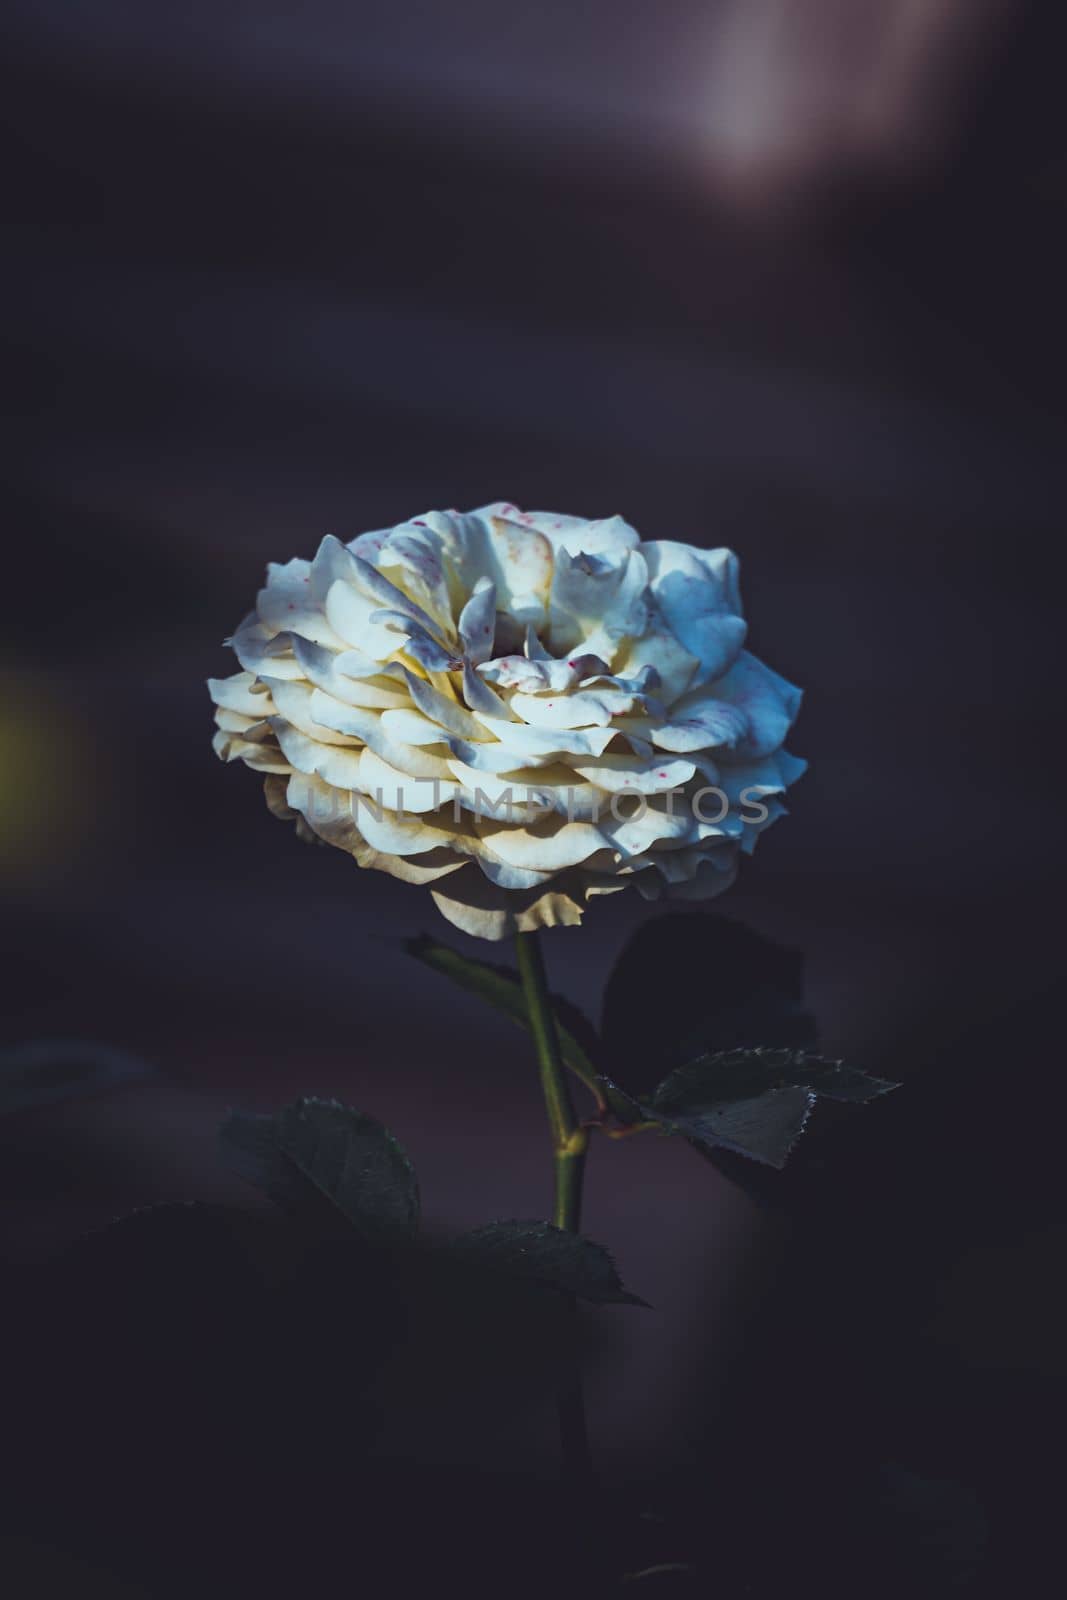 White rose in dark background, White rose of york, by abdulkayum97